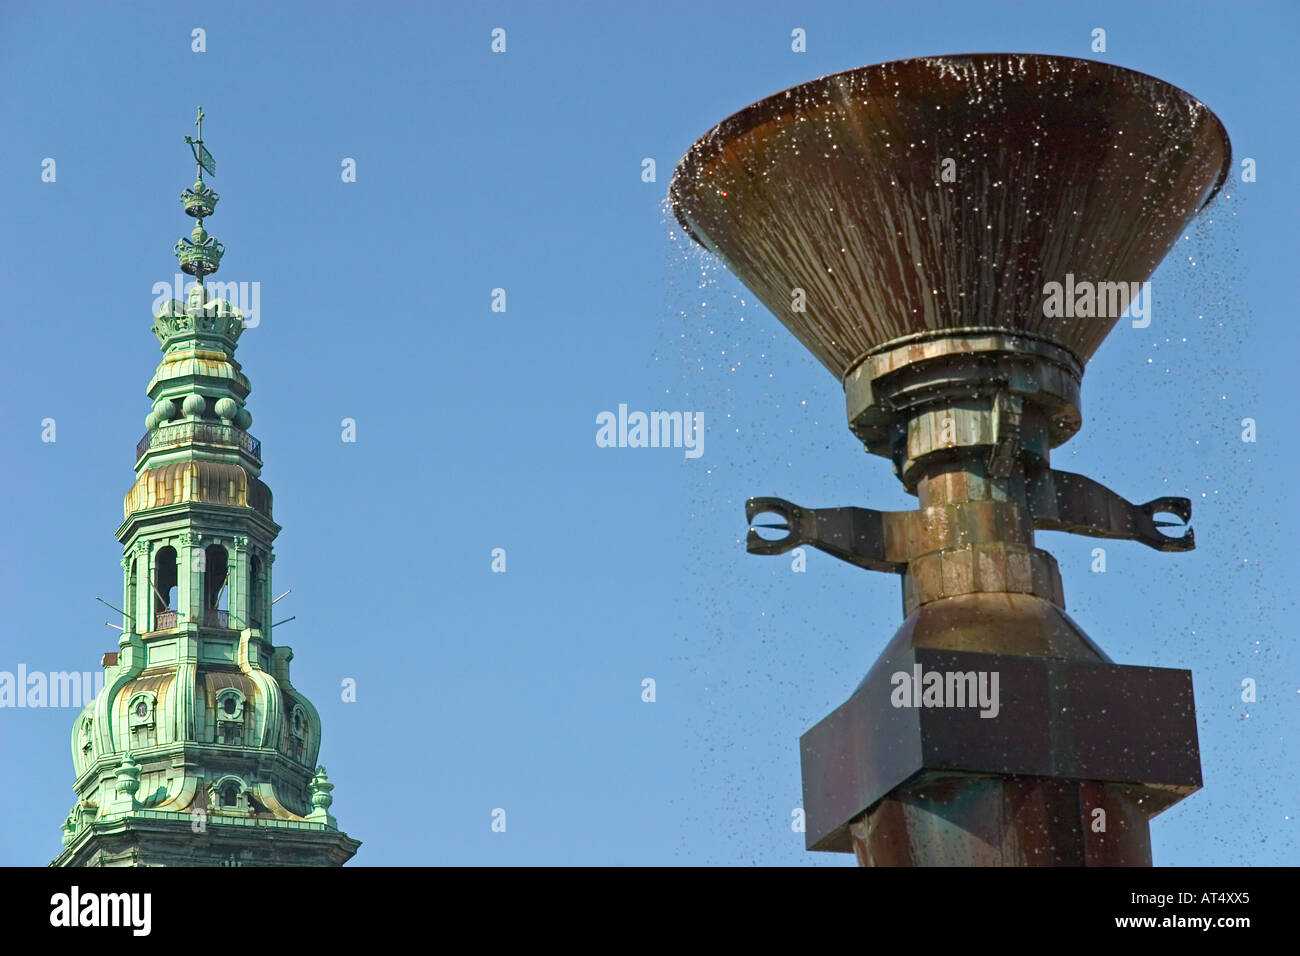 Water fountain at the Royal Library Garden, behind the spire of the Parliamen, Christiansborg. Copenhagen, Denmark Stock Photo